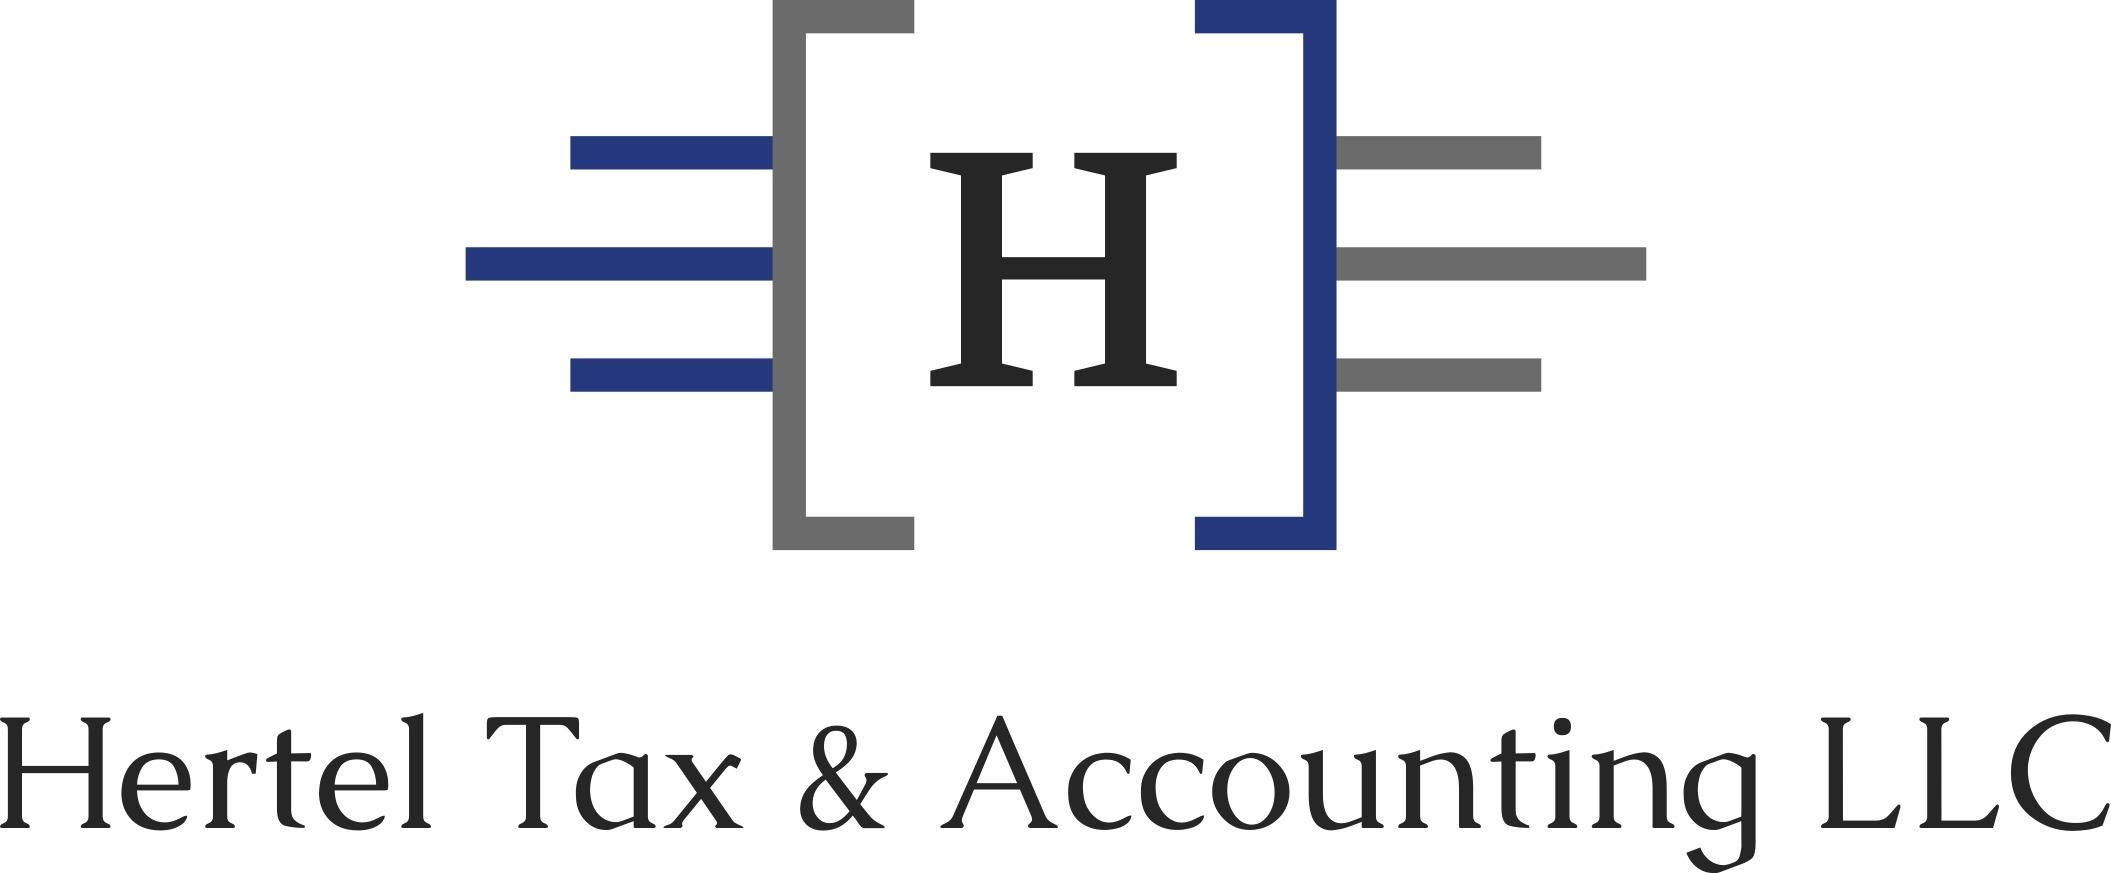 Hertel Tax & Accounting LLC